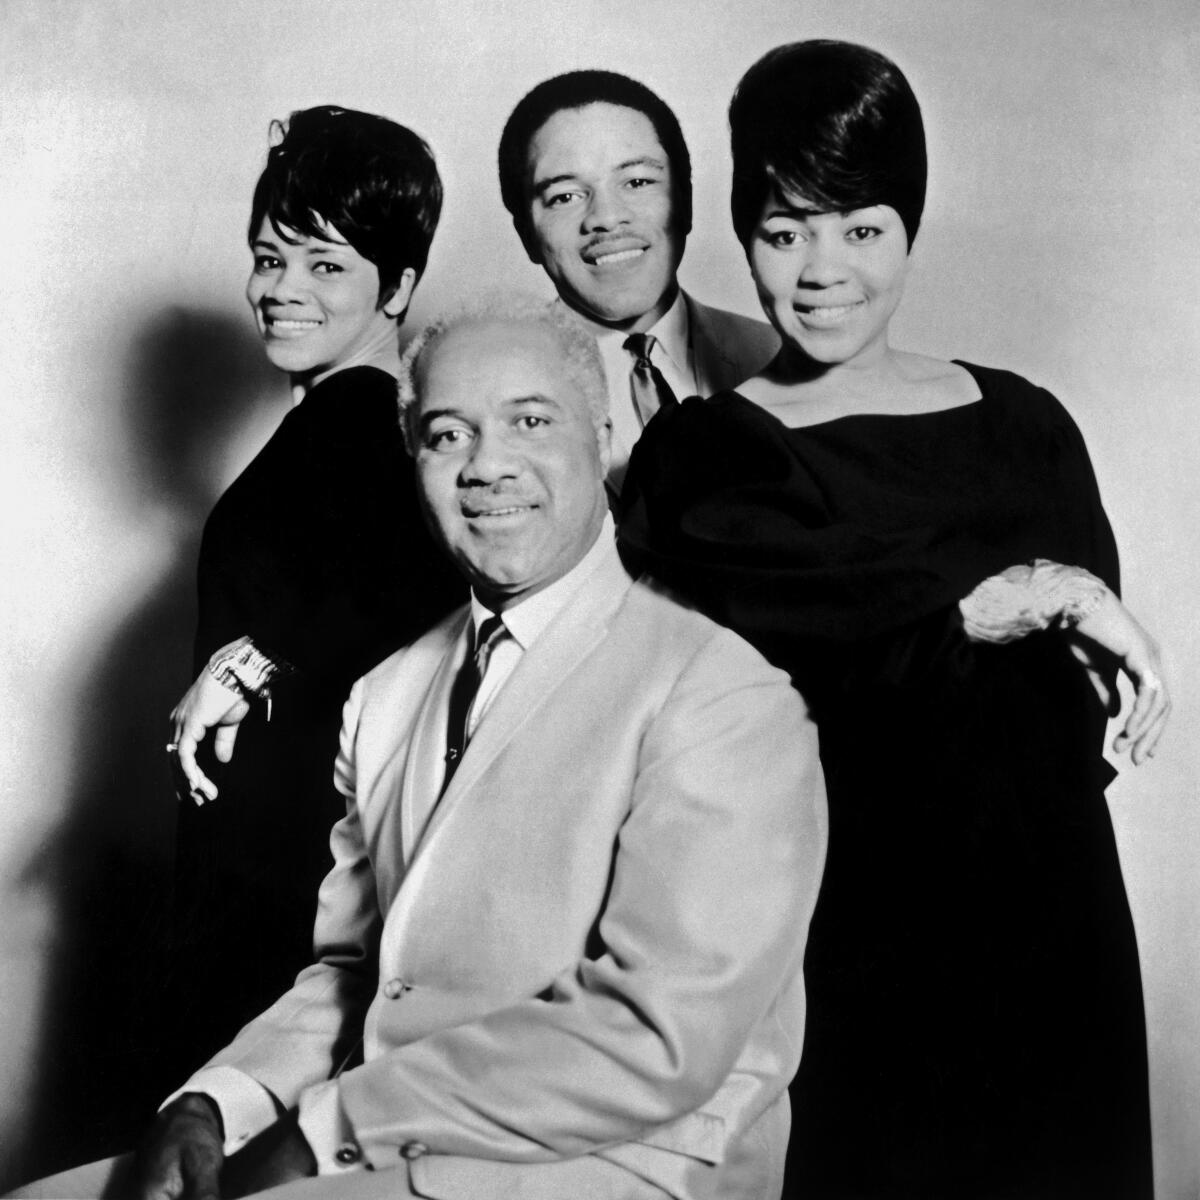 Mavis Staples, Pervis Staples, Cleotha Staples and Roebuck 'Pops' Staples pose in 1965.